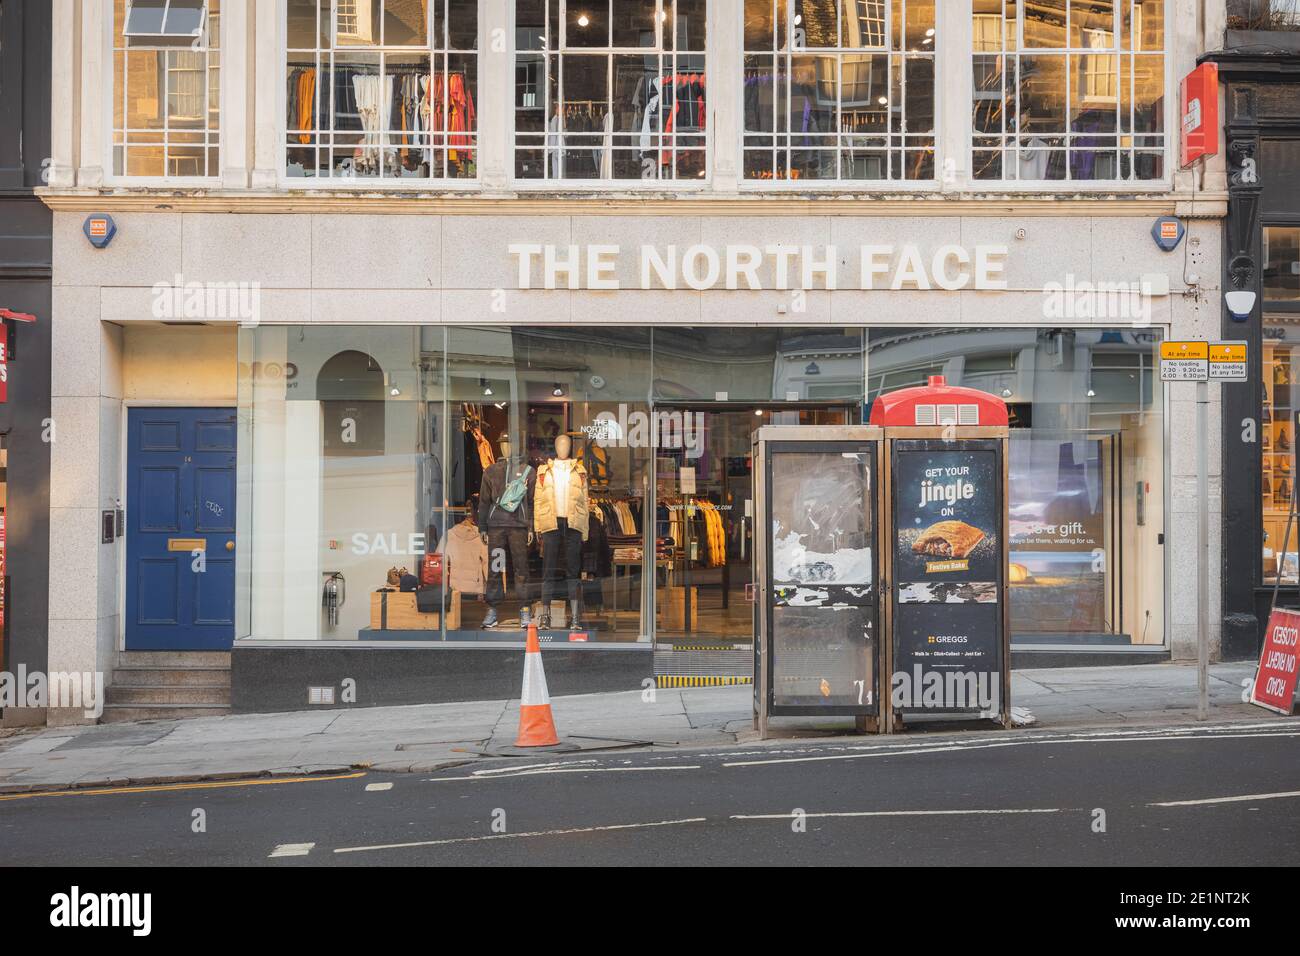 Edinburgh, Scotland - January 8 2021: The North Face retail location on Frederick Street in Edinburgh closed during Covid-19 lockdown. Stock Photo